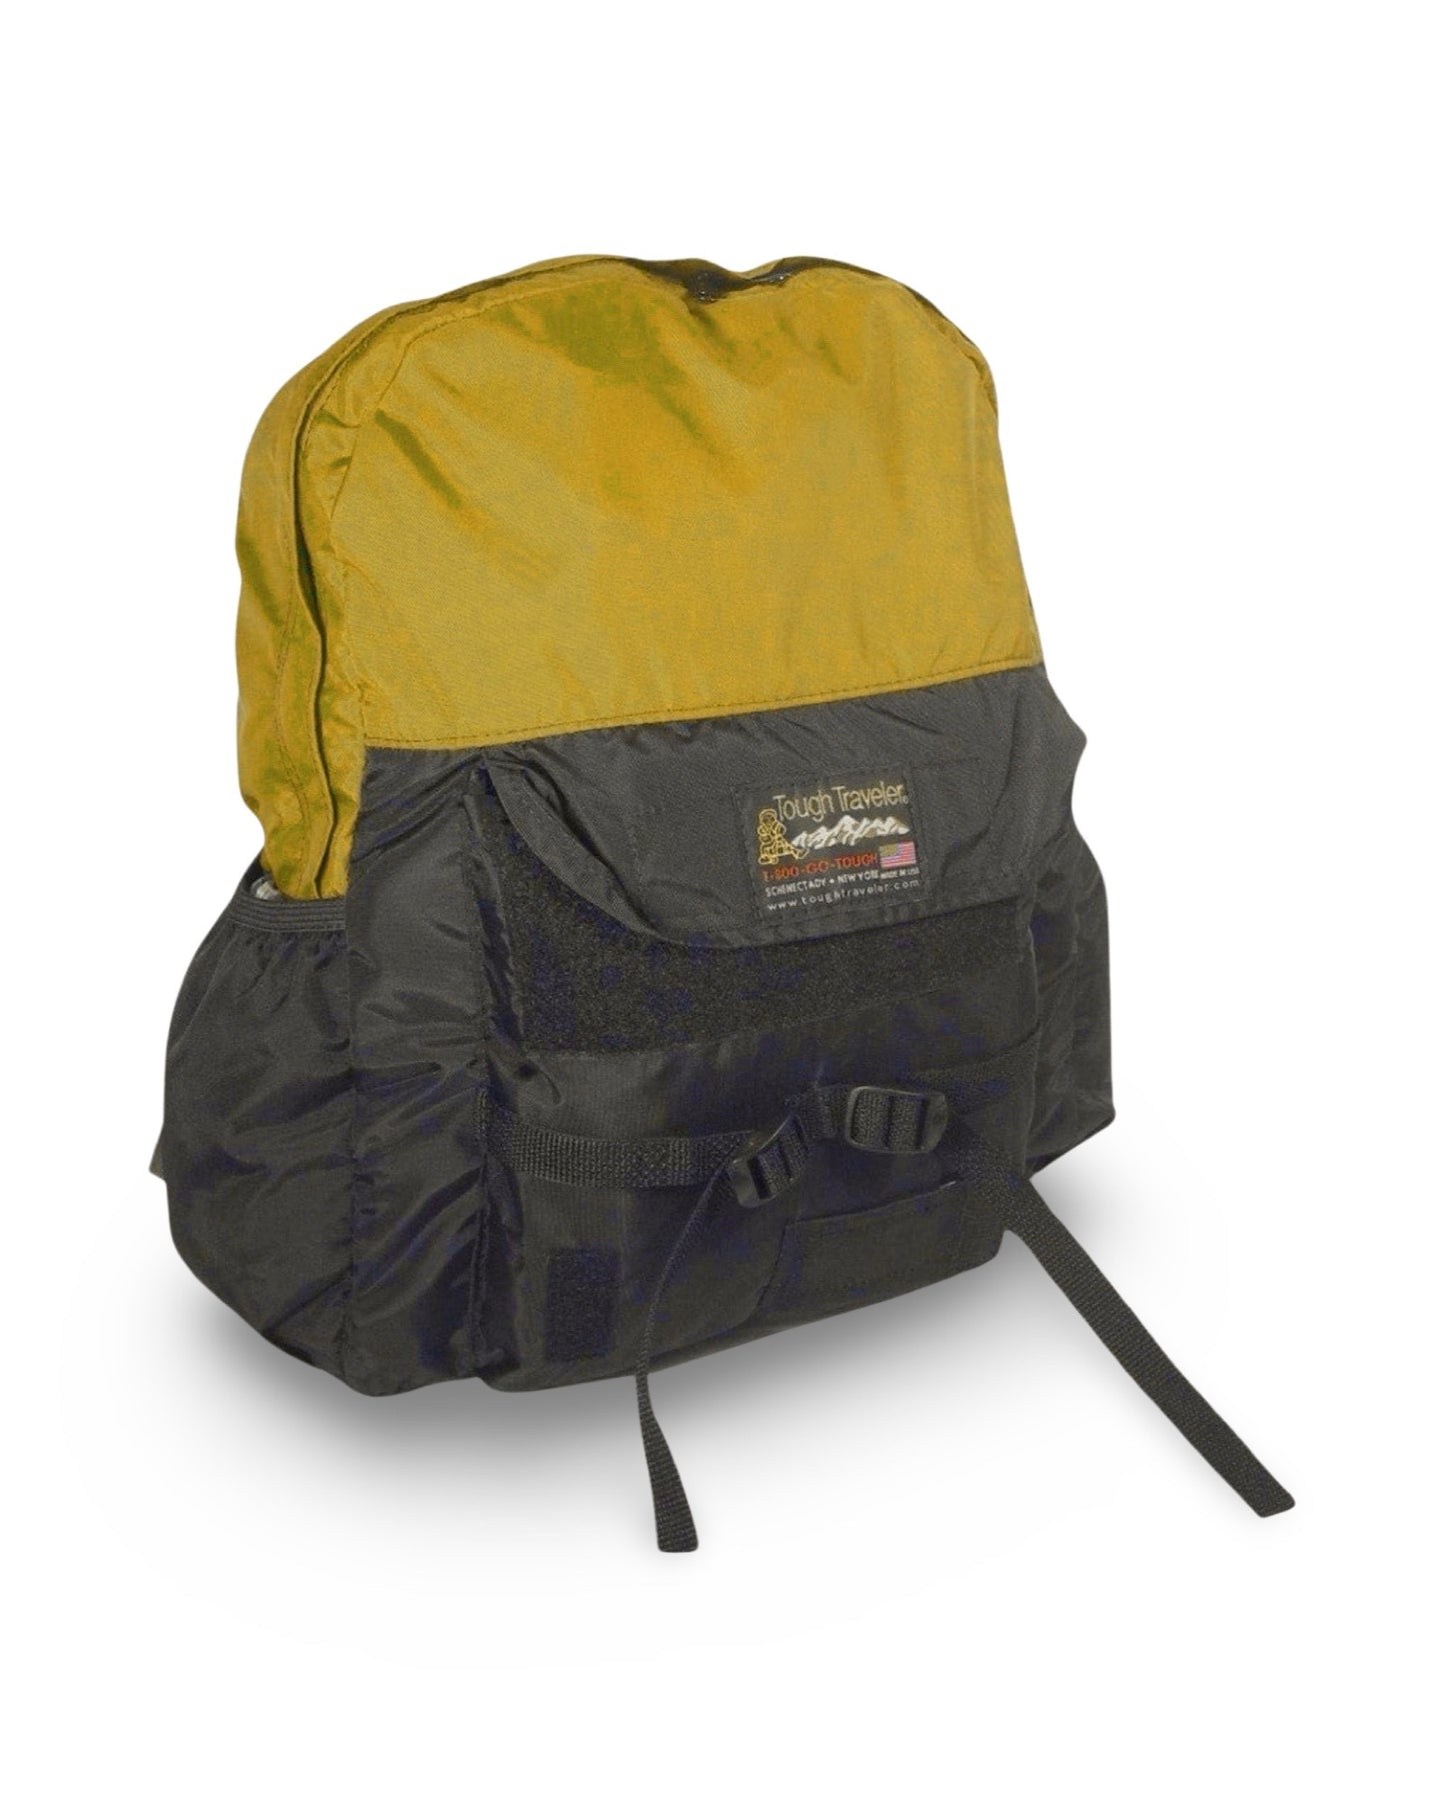 TREKKER-M Minimalist Backpacks, by Tough Traveler. Made in USA since 1970